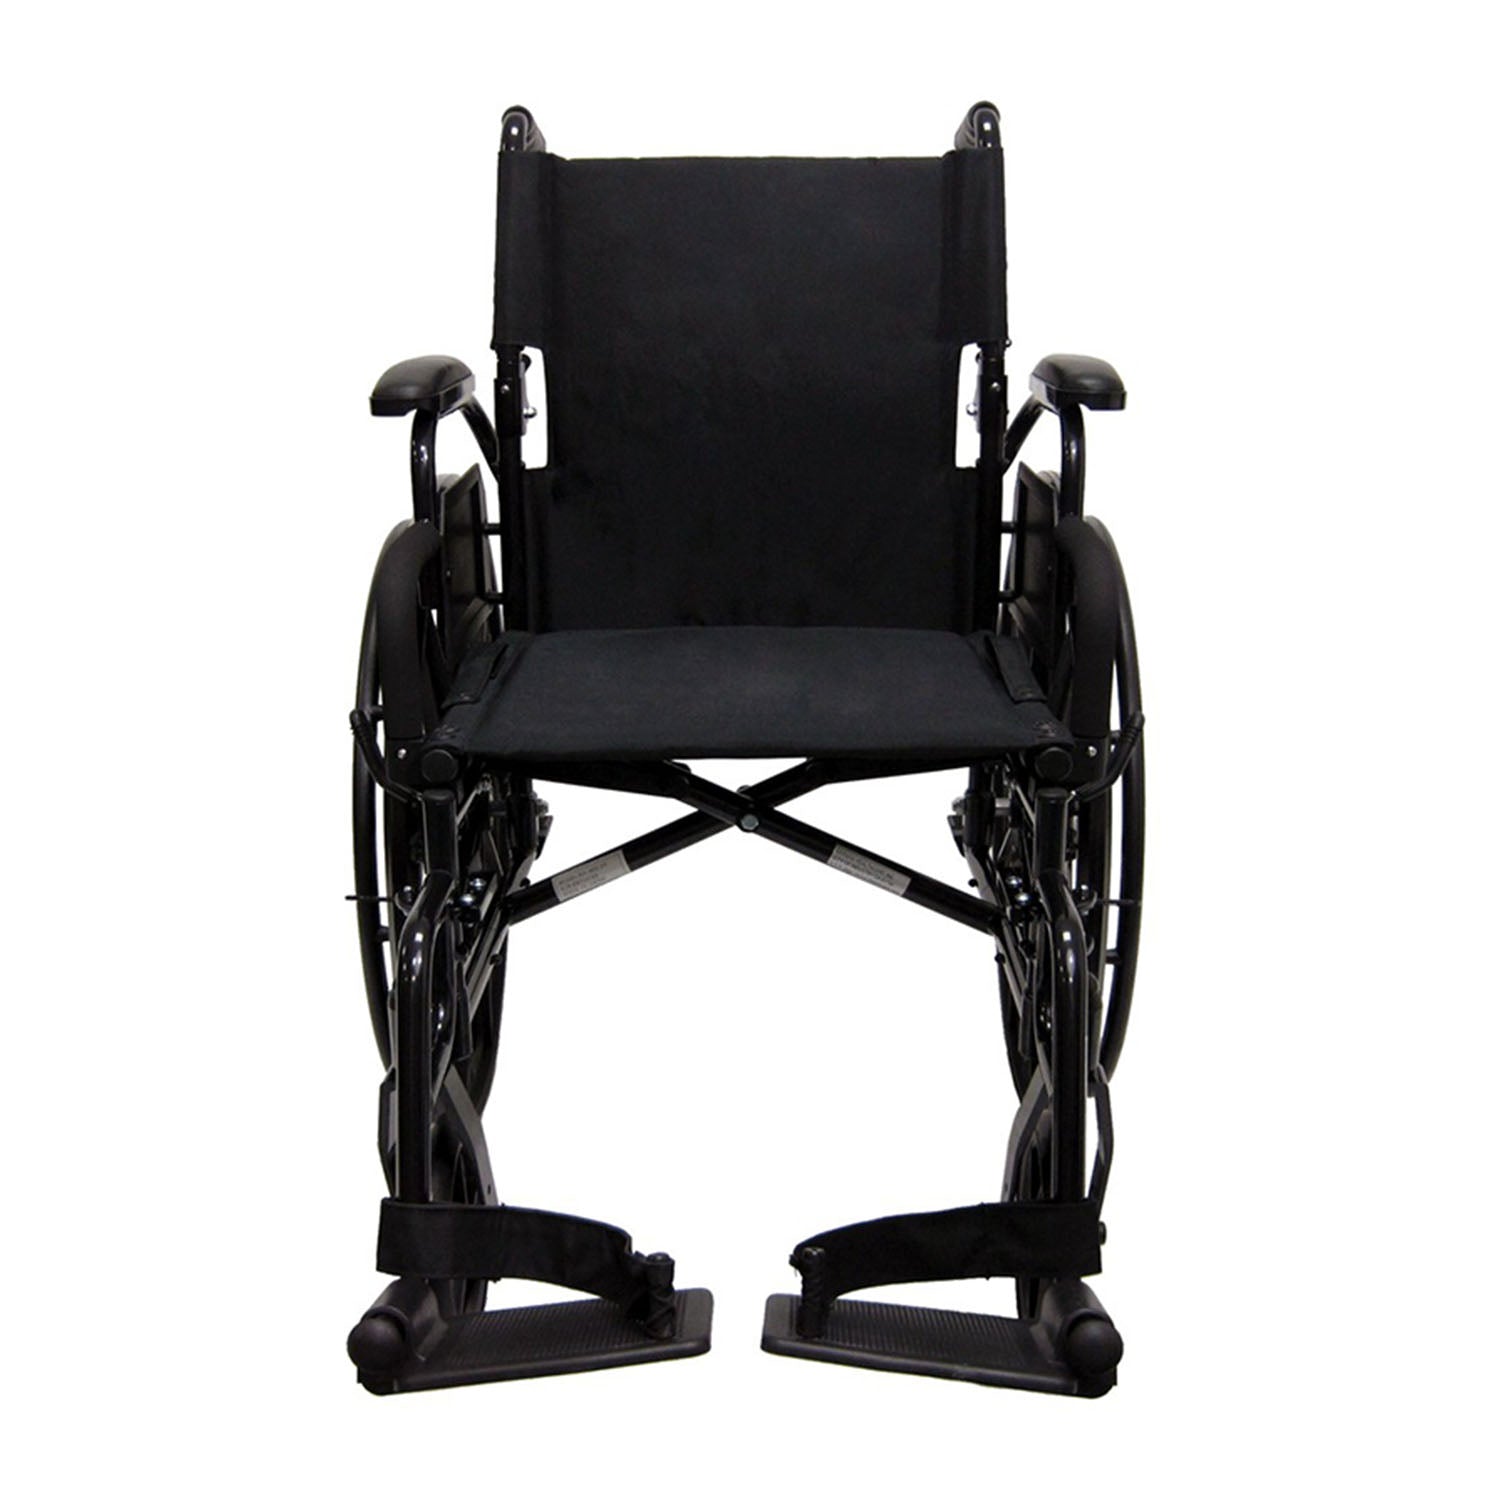 Karman 802-DY 16 inch Seat Ultra Lightweight Wheelchair with Flip Back Armrest